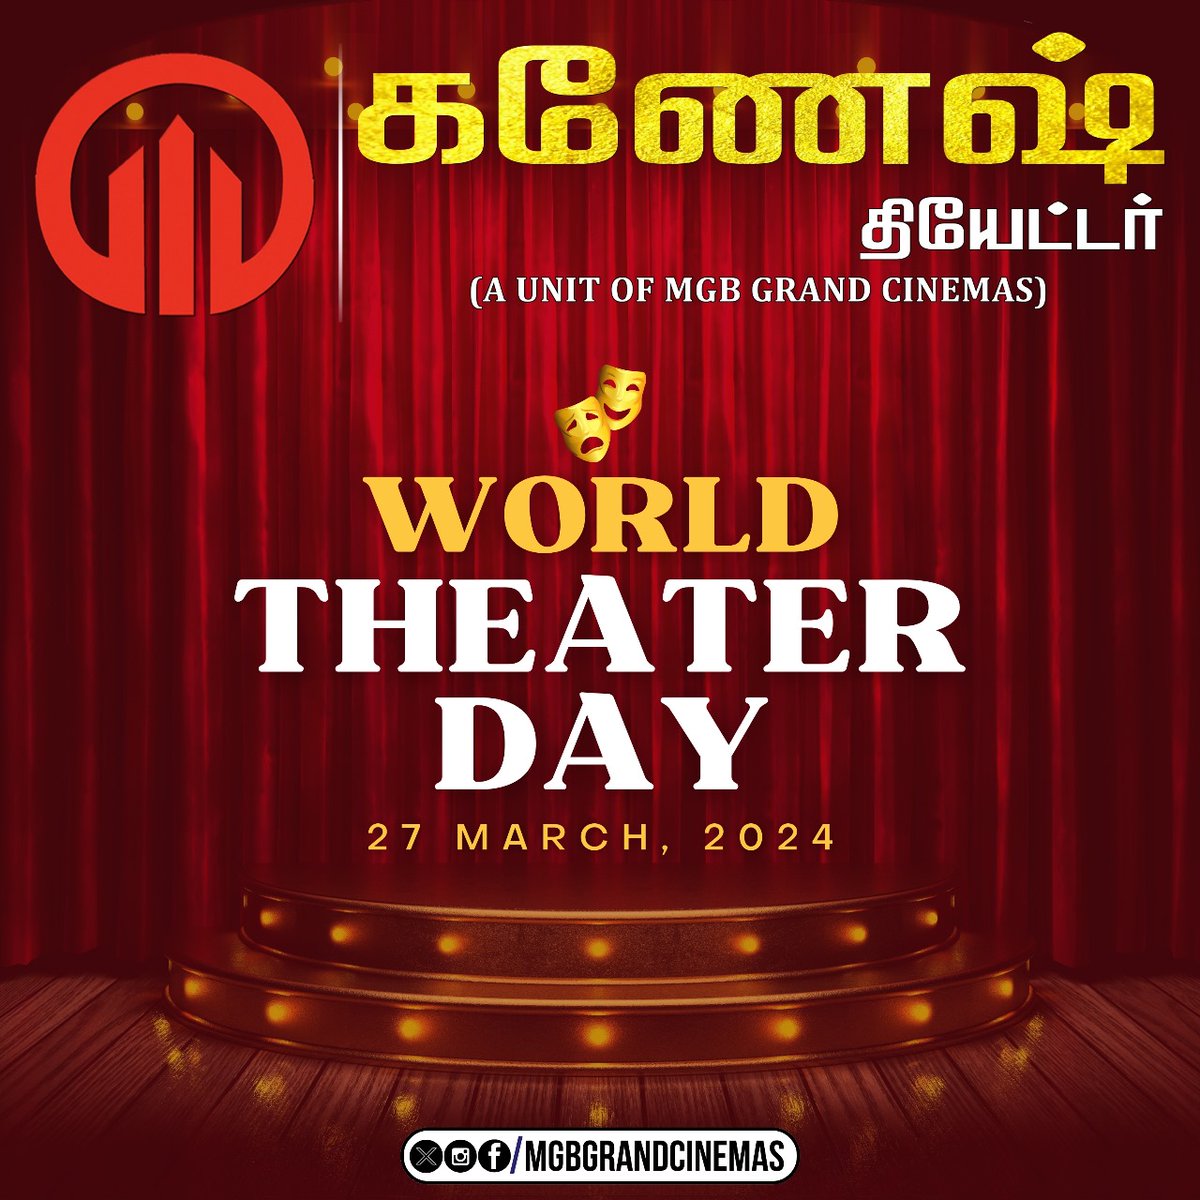 #WorldTheatreDay 🎭

#Cinema #Theatre #MGB #March27 #TamilCinema #TheatreDay #MGBTheatre #MGBCinemas #MGBGrandCinemas #GaneshTheatre #MGBGanesh #Tiruppur #RGBLaser #DolbyAtmos #MGBGaneshTheatre